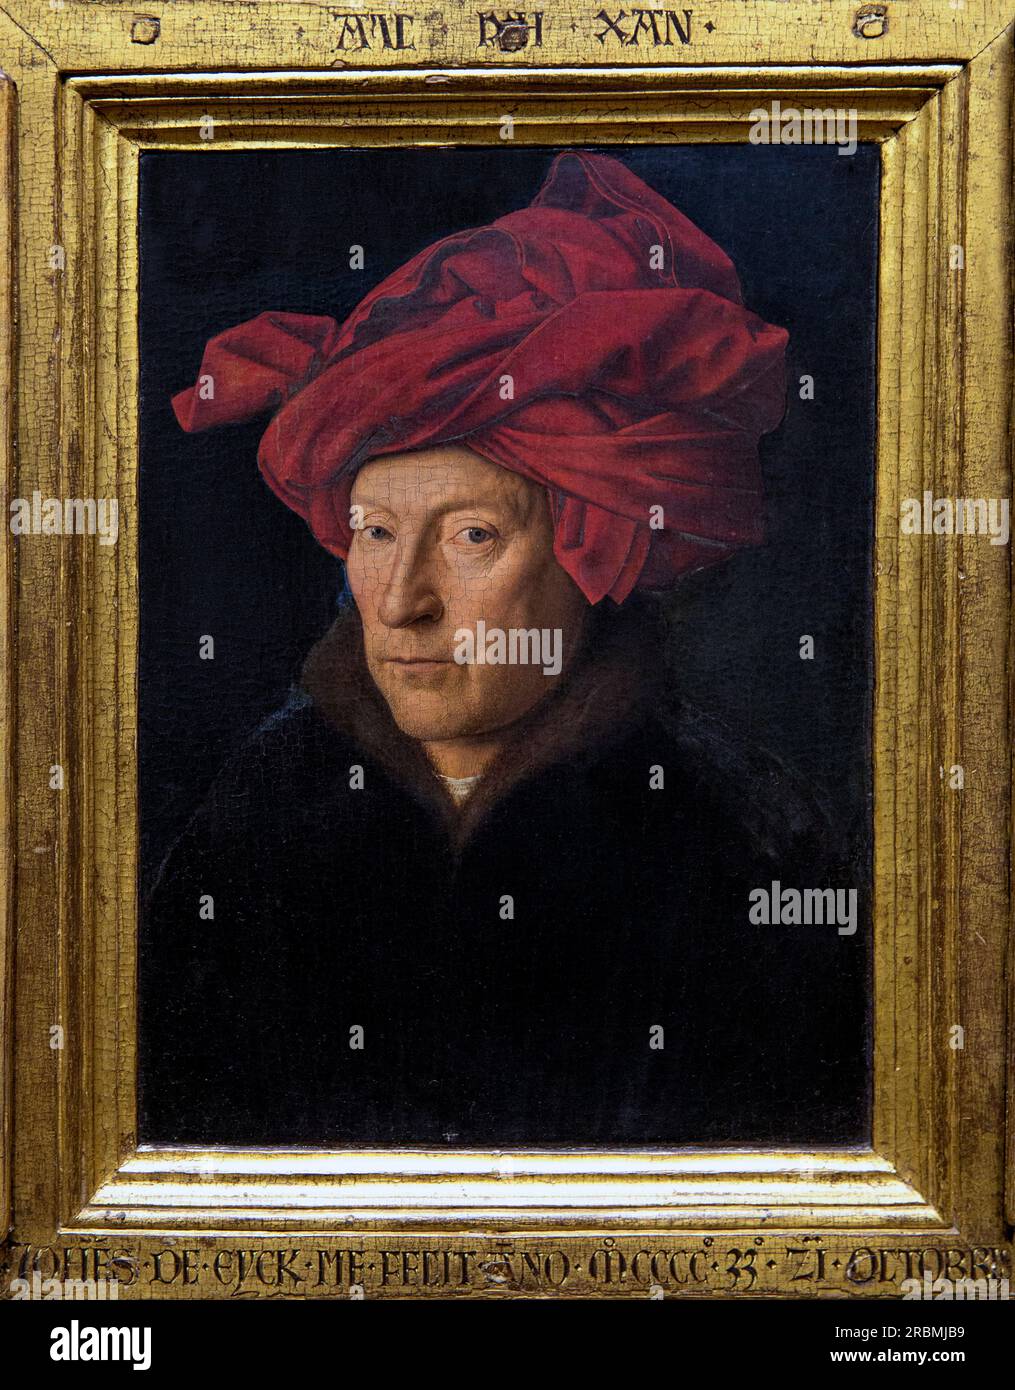 Portrait of a Man, Jan van Eyck, 1443 Stock Photo - Alamy